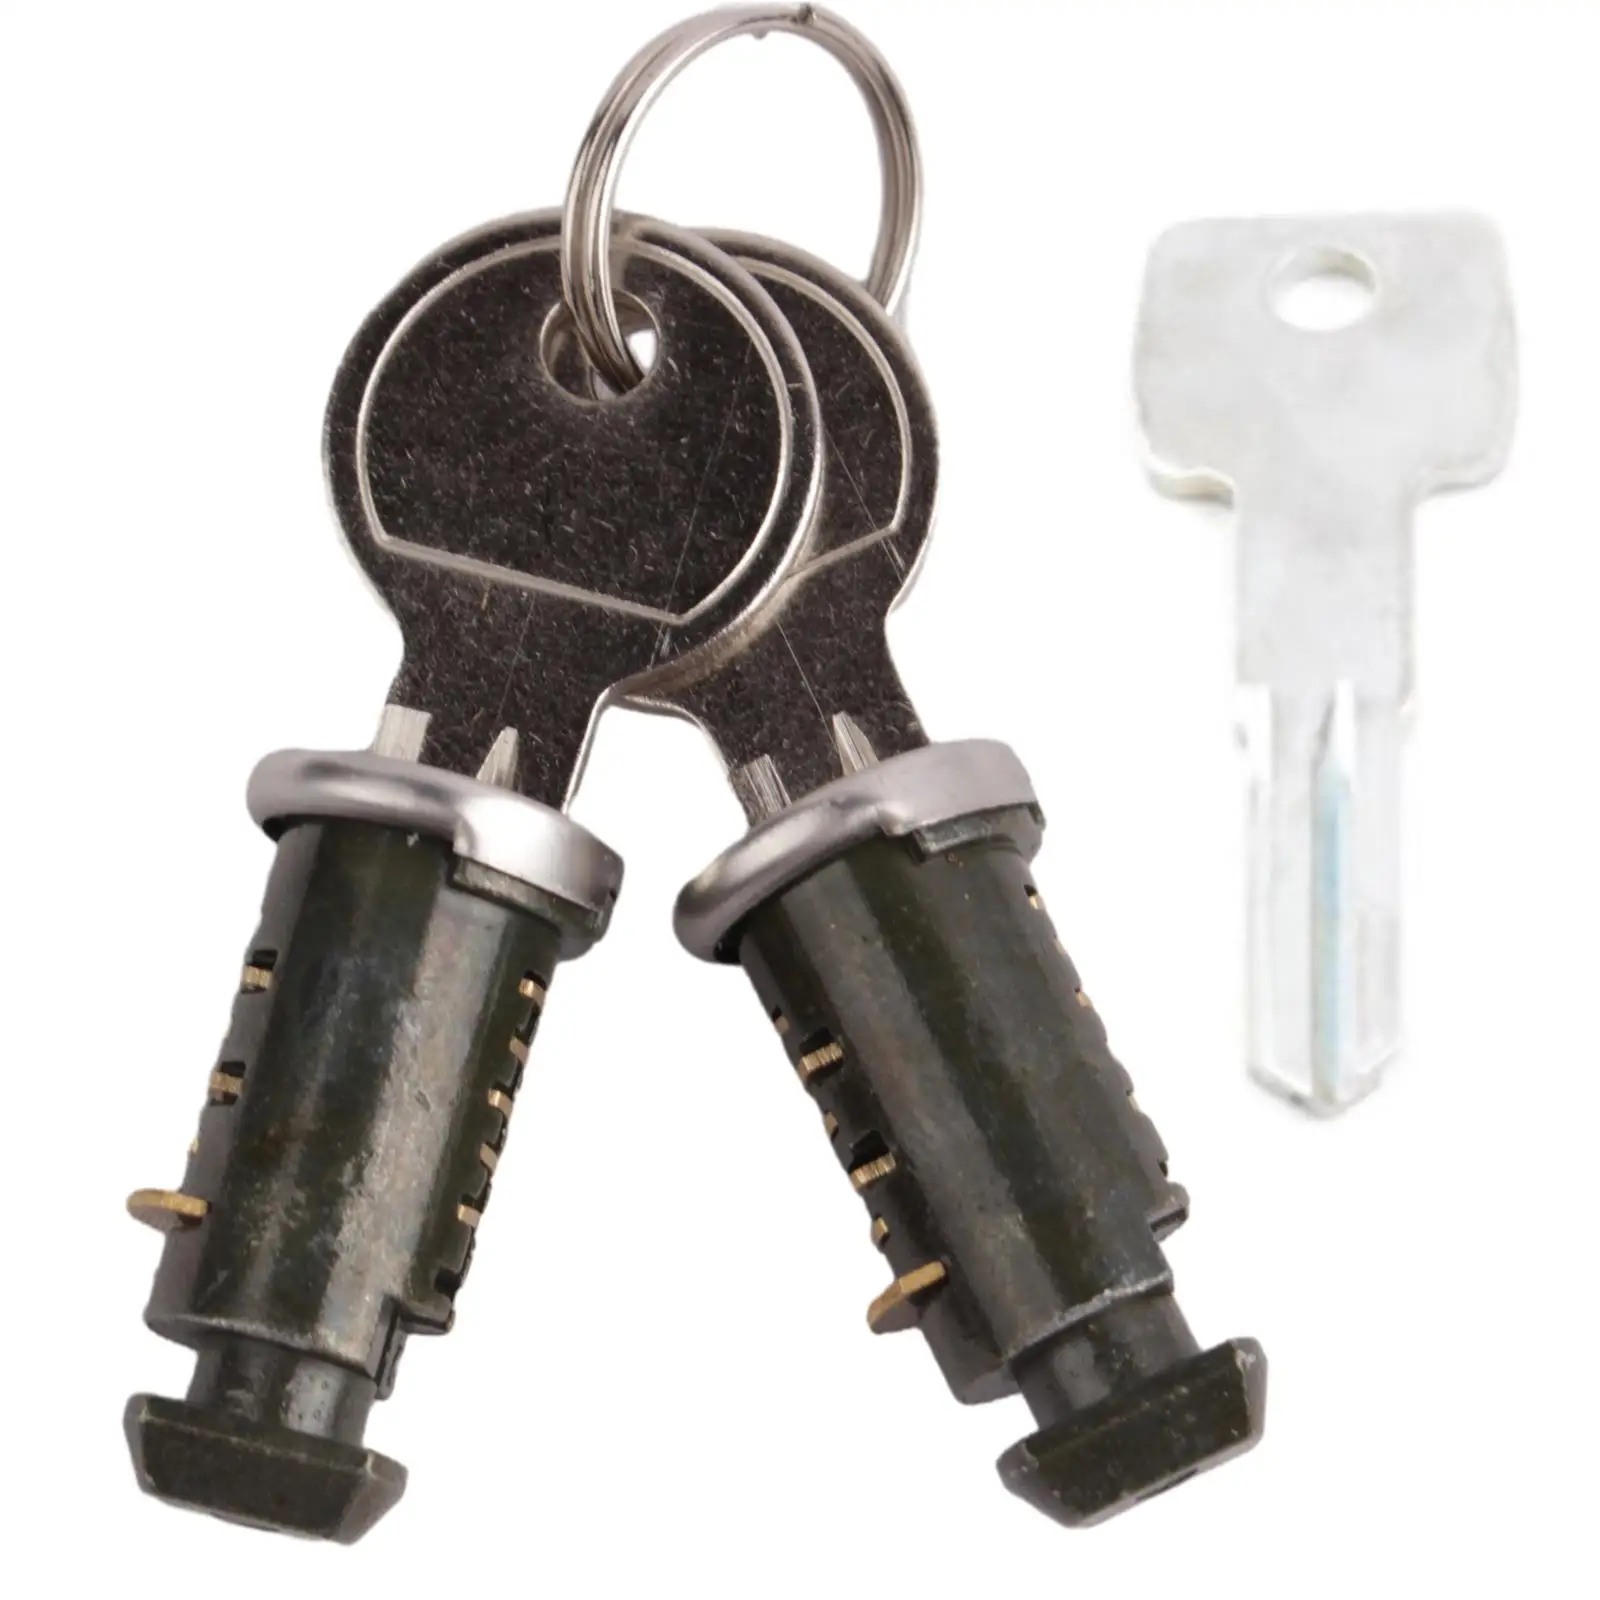 Lock Cylindes Roof Rack Locks Professional Accessory Lock Cores Cross Bars Locks and Key Kit for Car Rack Locks SUV durable